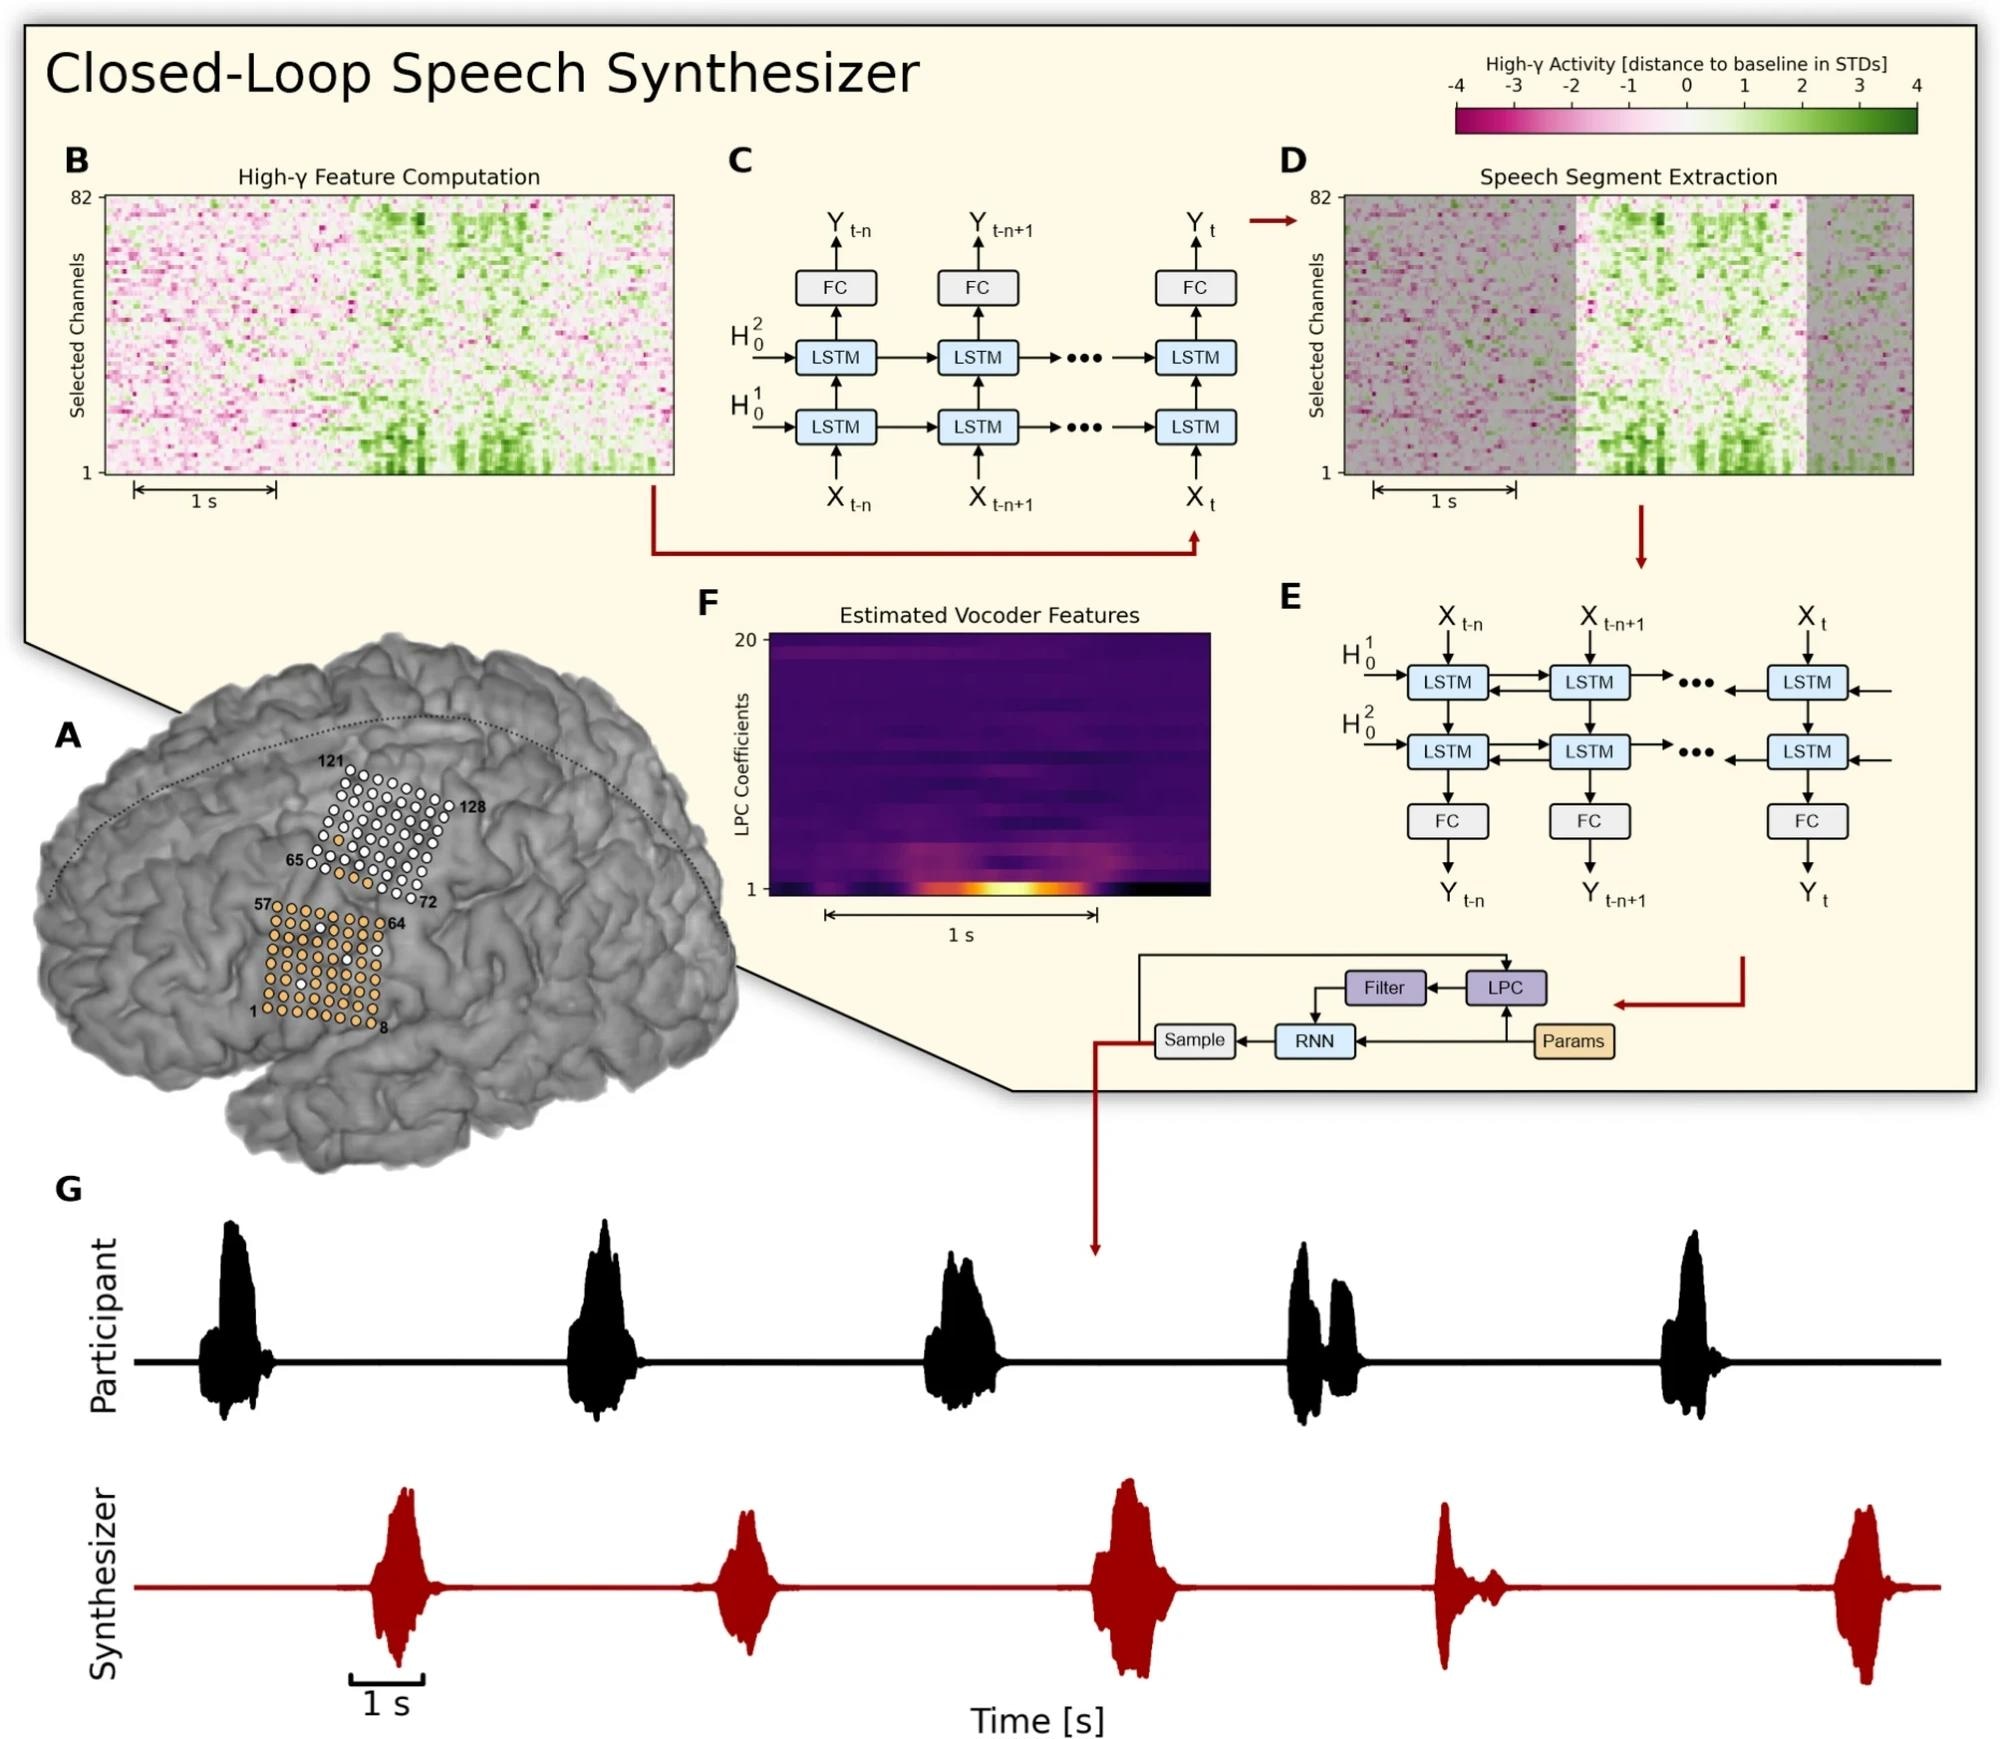 Brain-computer interface translates ALS patient's brain activity into spoken words - News-Medical.Net